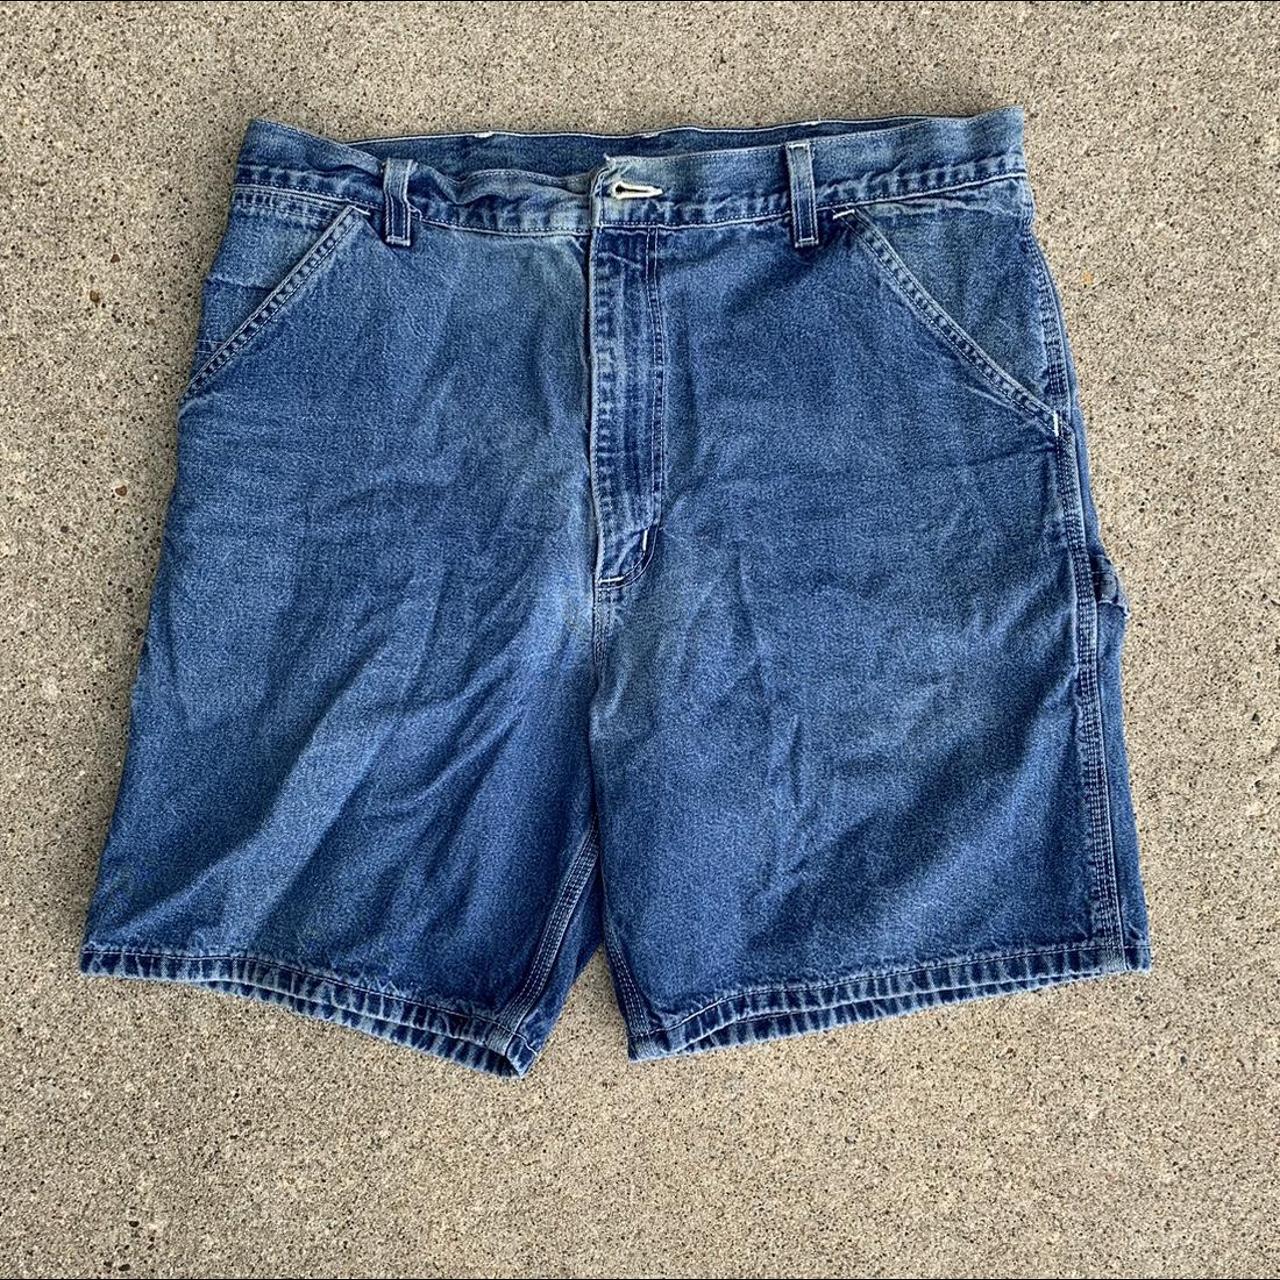 insane vintage CARHARTT jorts/jean shorts size: tag... - Depop